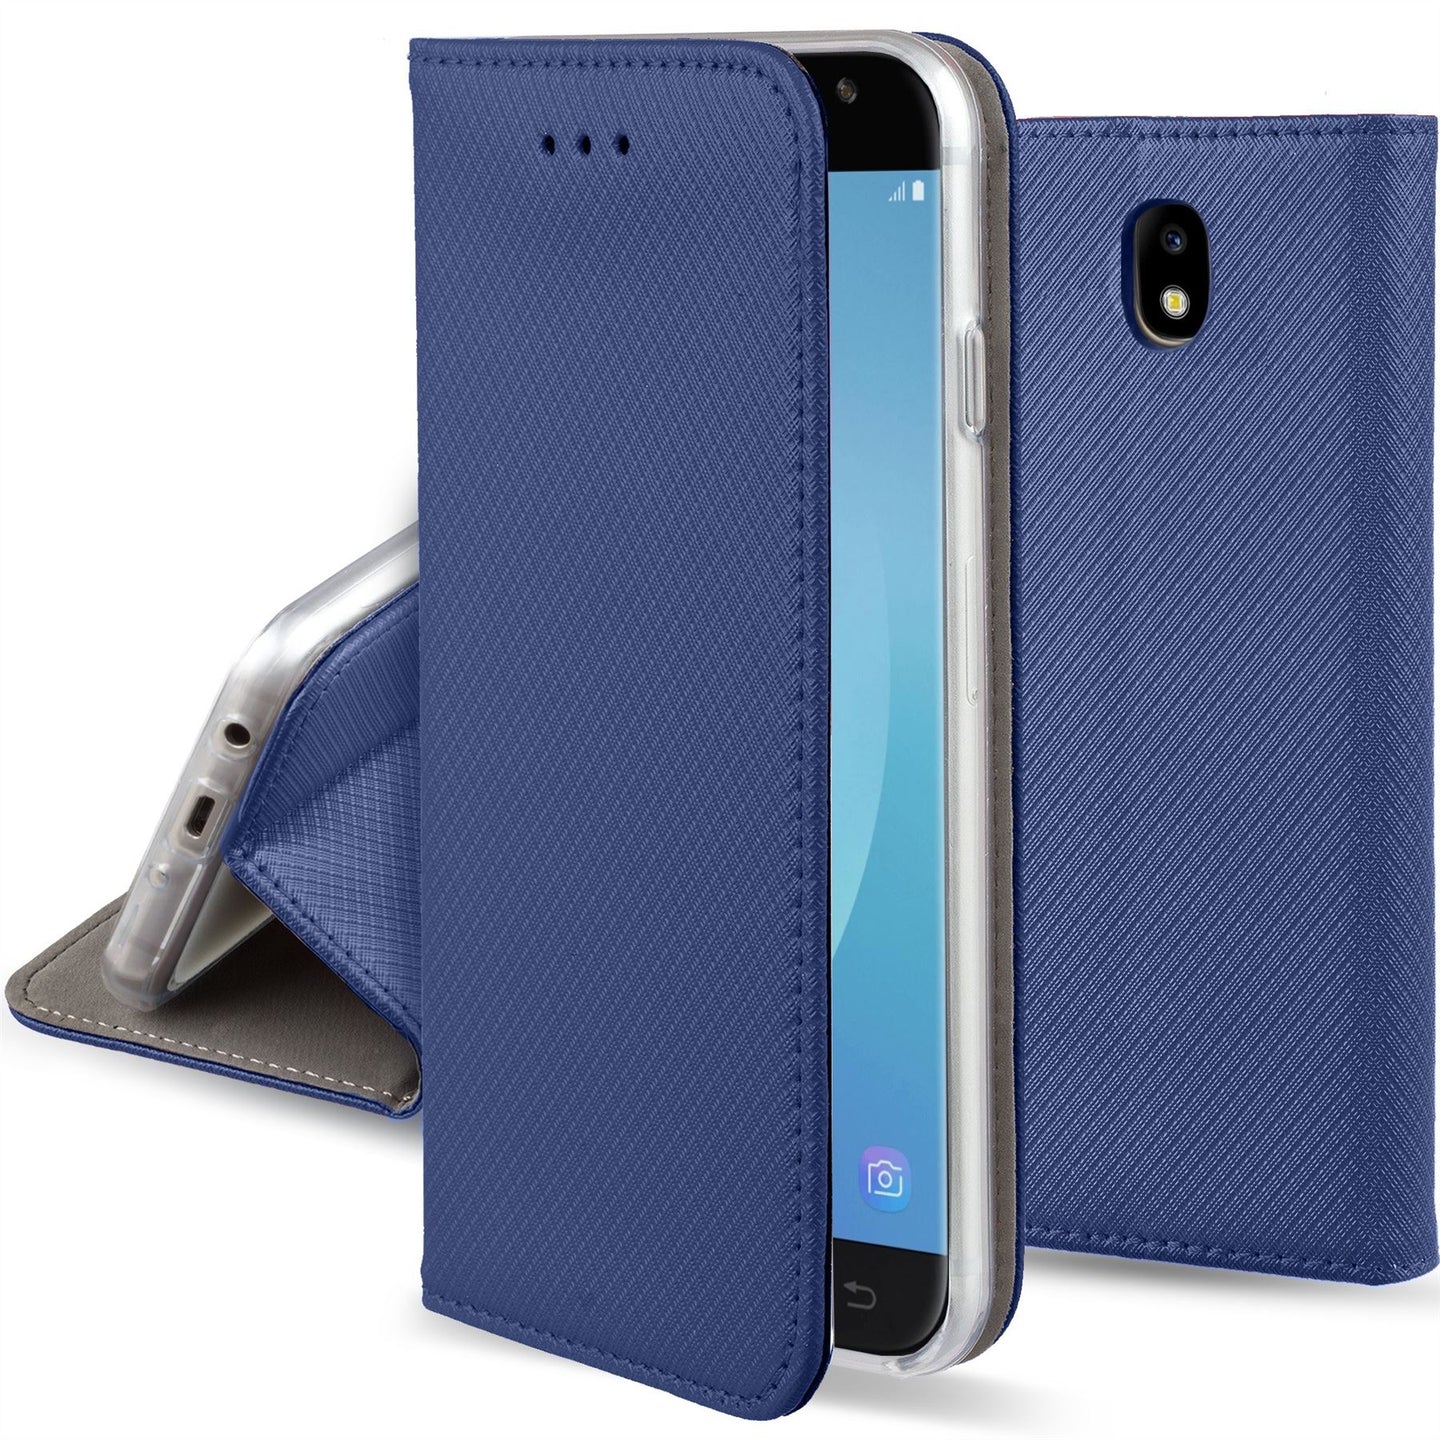 Moozy Case Flip Cover for Samsung J5 2017, Dark Blue - Smart Magnetic Flip Case with Card Holder and Stand